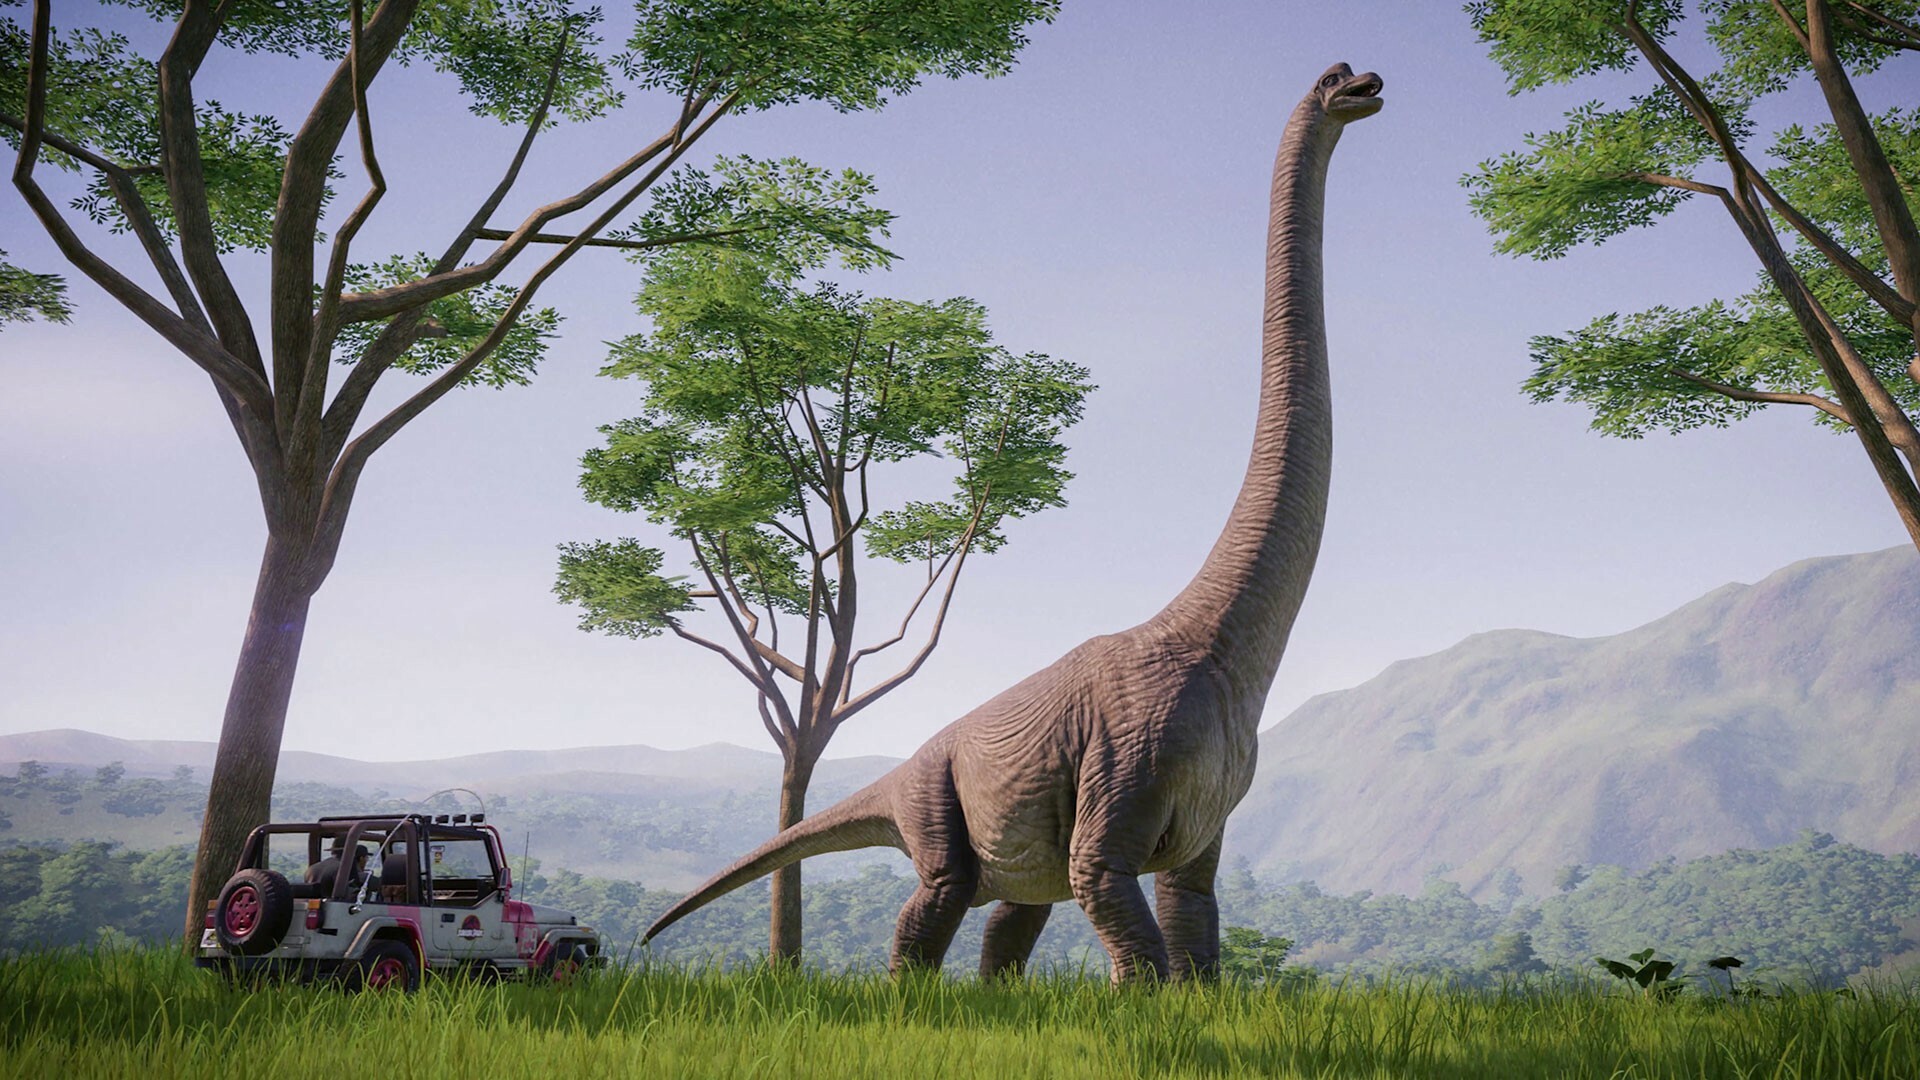 Jurassic Park: The film won more than twenty awards, including three Academy Awards. 1920x1080 Full HD Background.